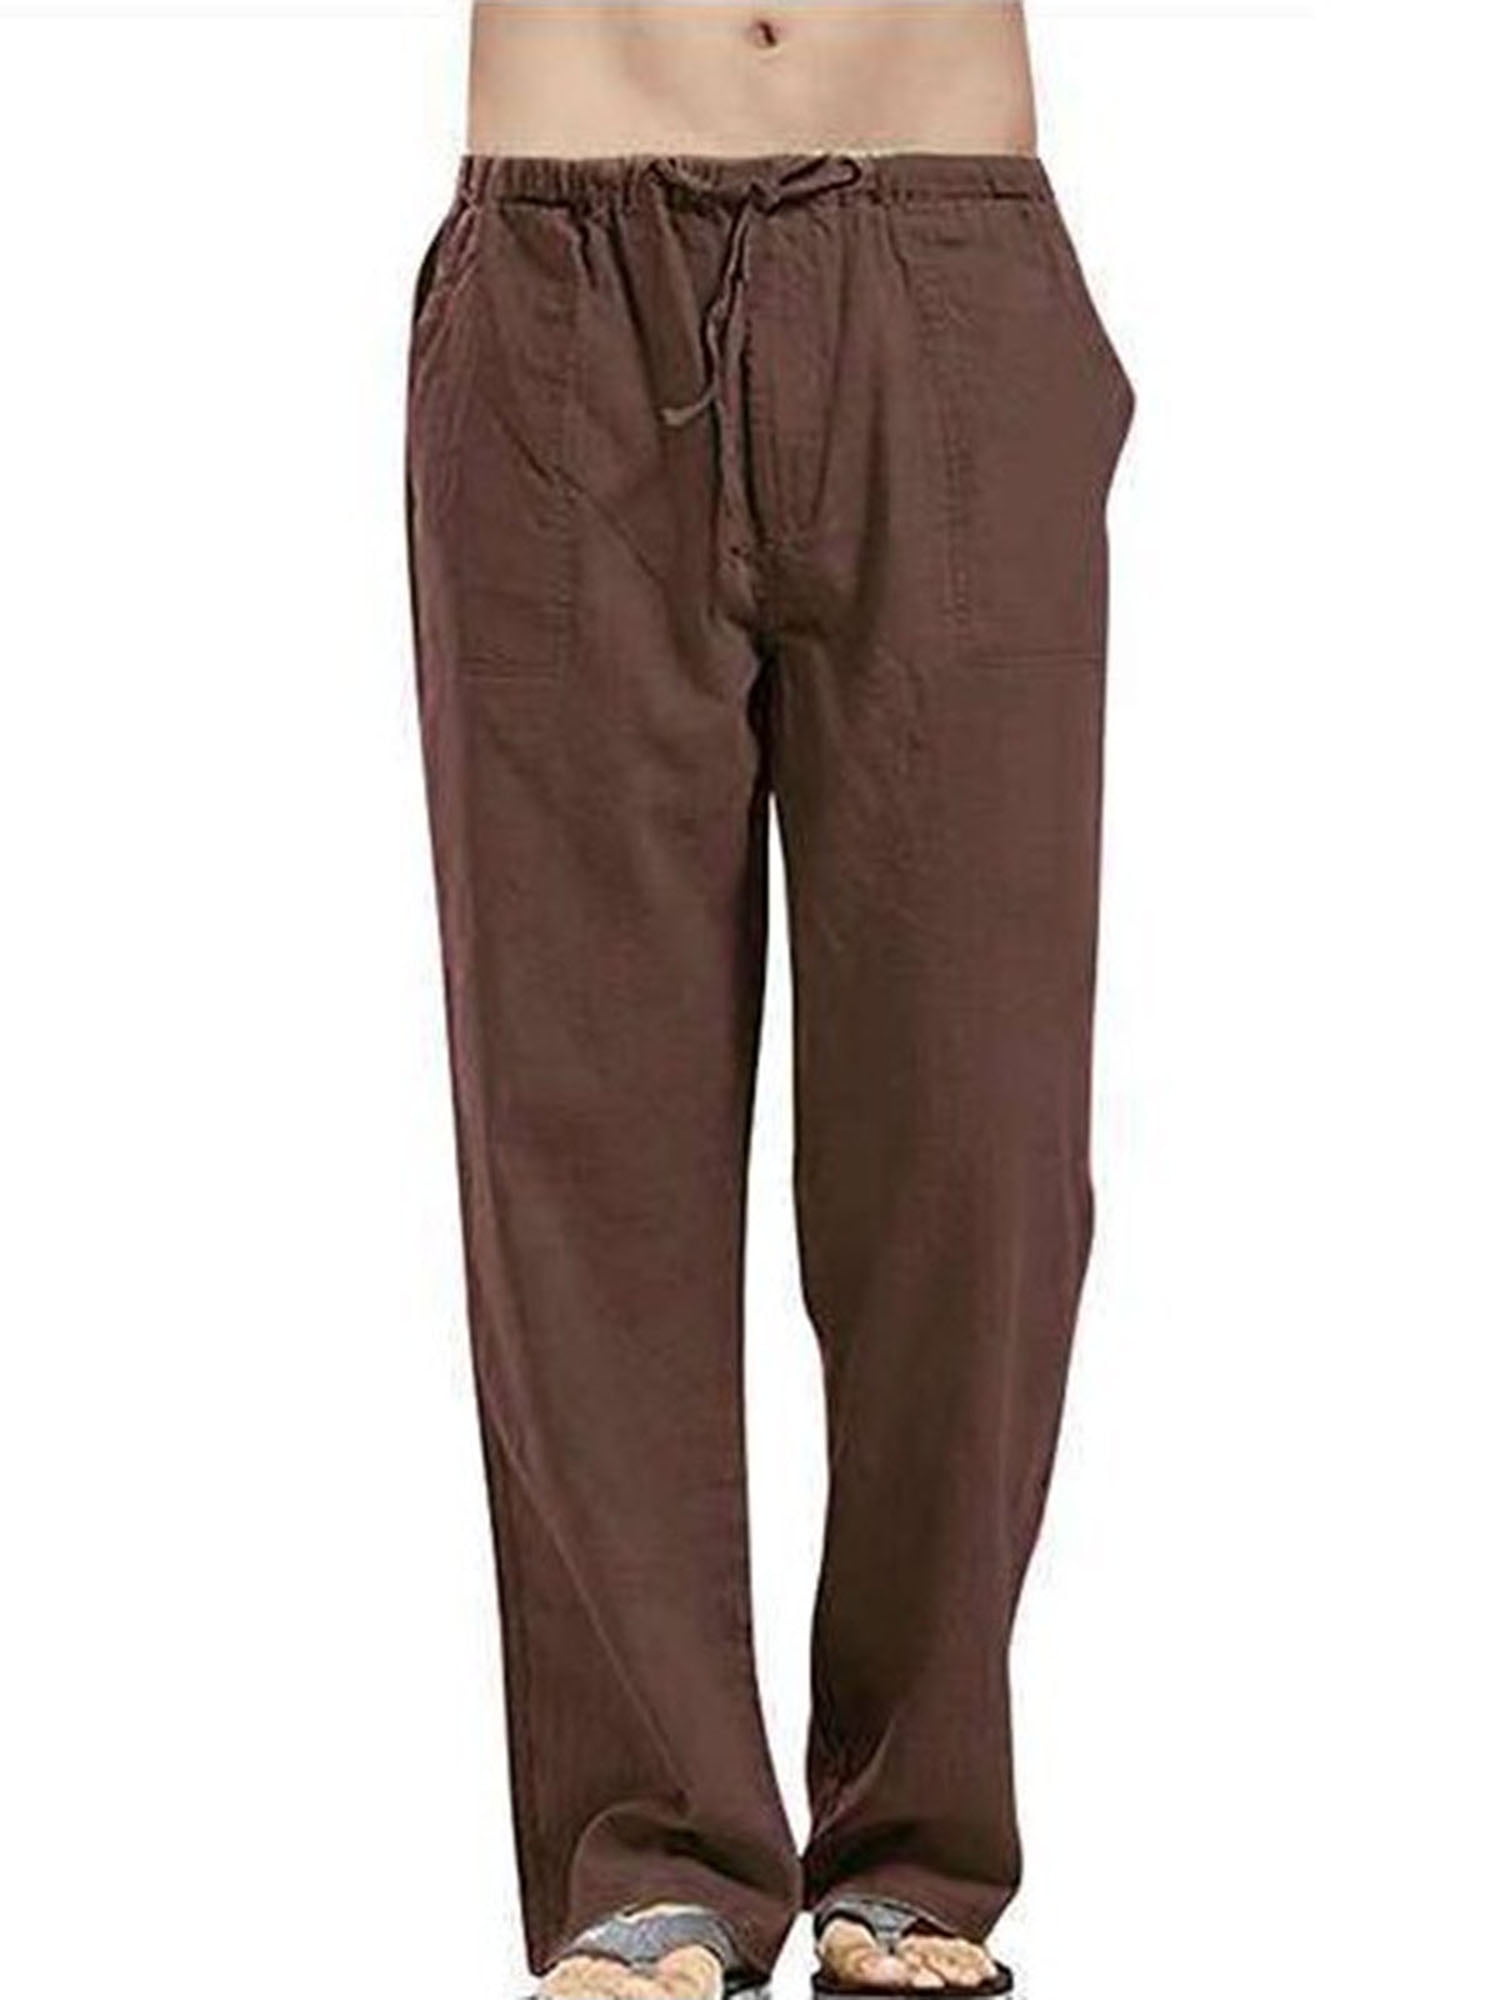 TACVASEN Mens Casual Pants Drawstring Cotton Linen Jogger Yoga Lounge Pants with Pocket 